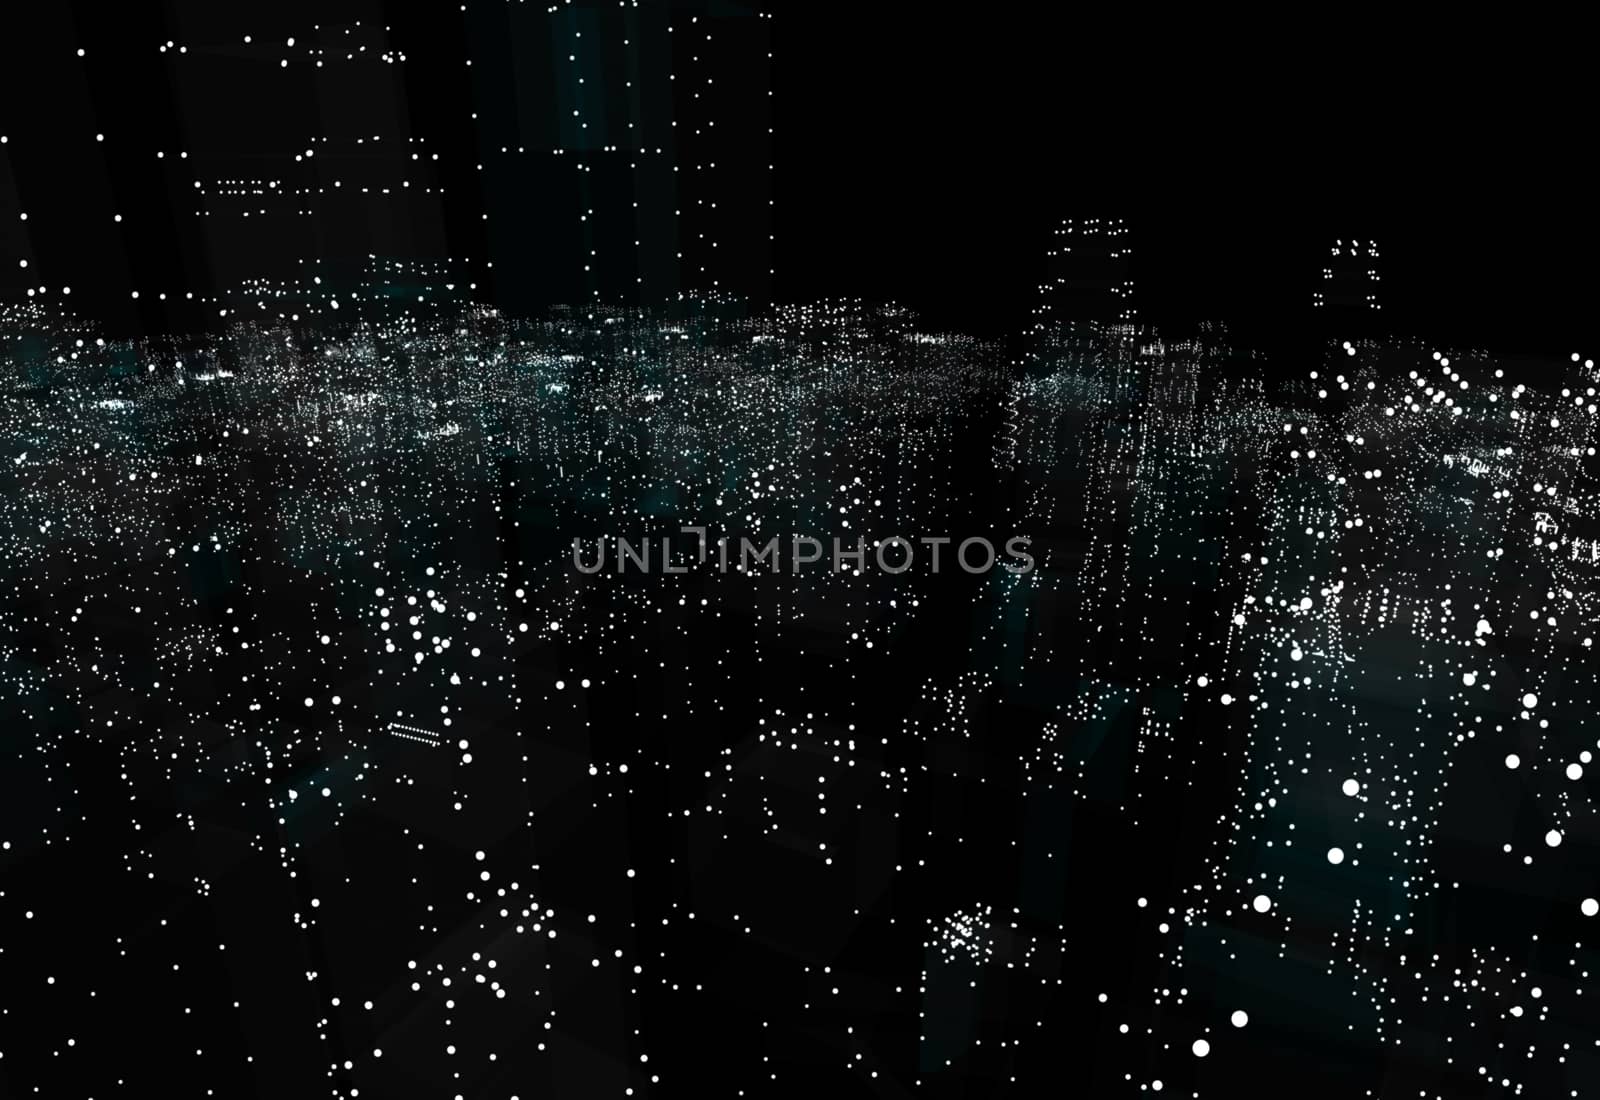 Illuminated night city skyline by cherezoff